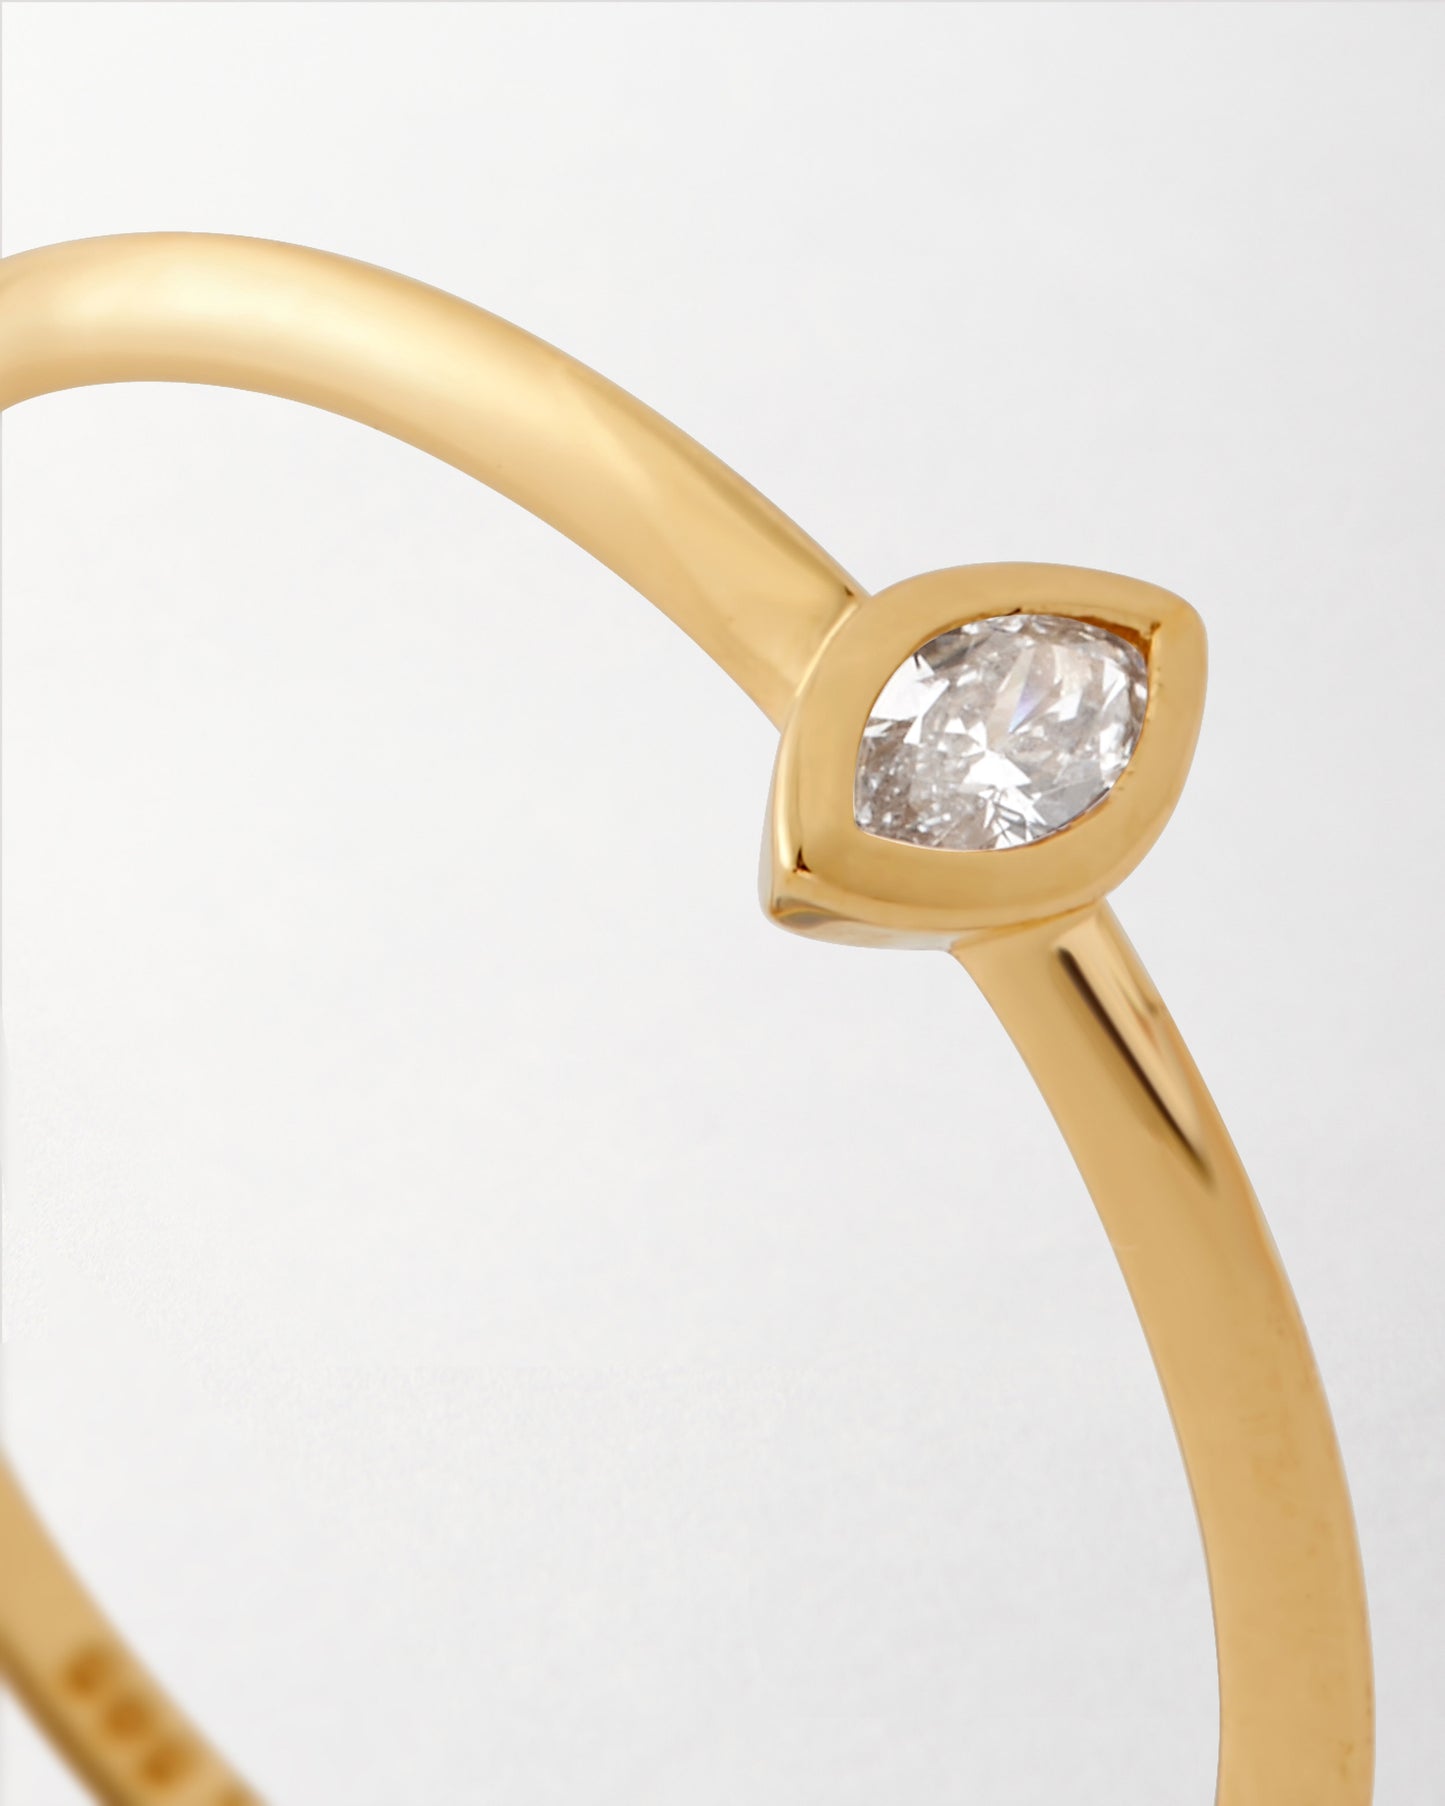 Victoria Marquise Diamond Ring